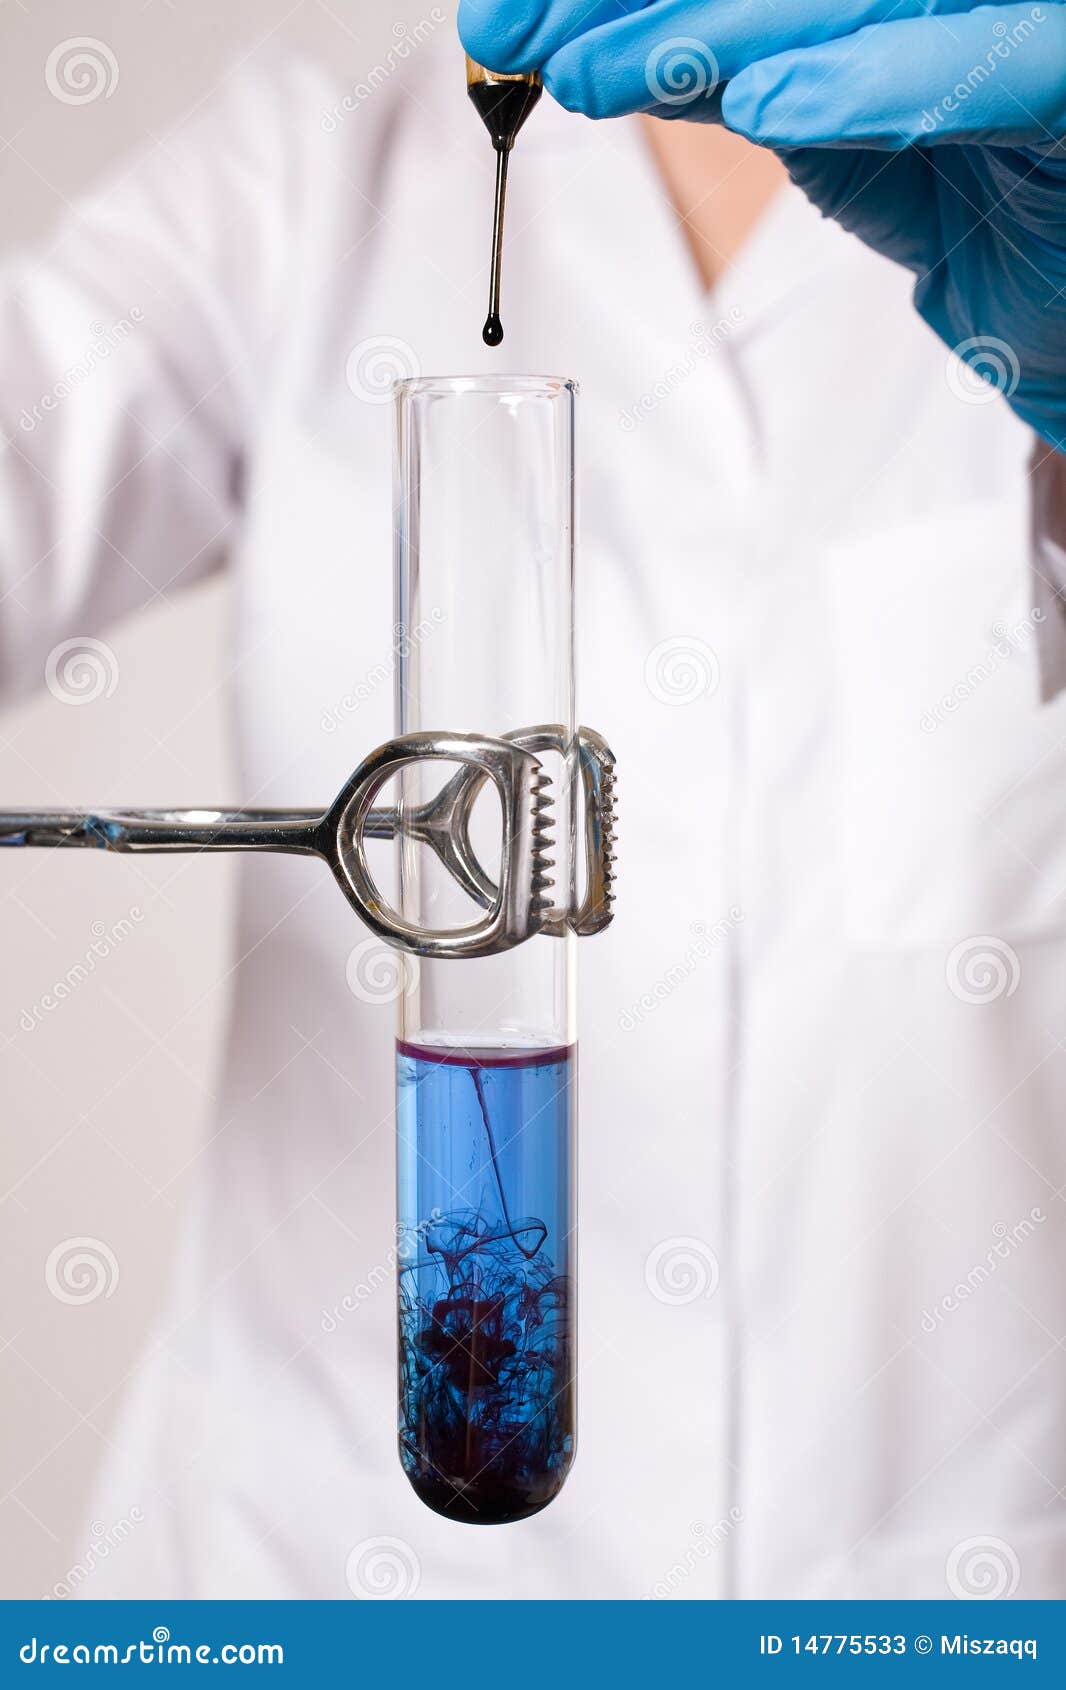 water contamination test, tube witb blue liquid